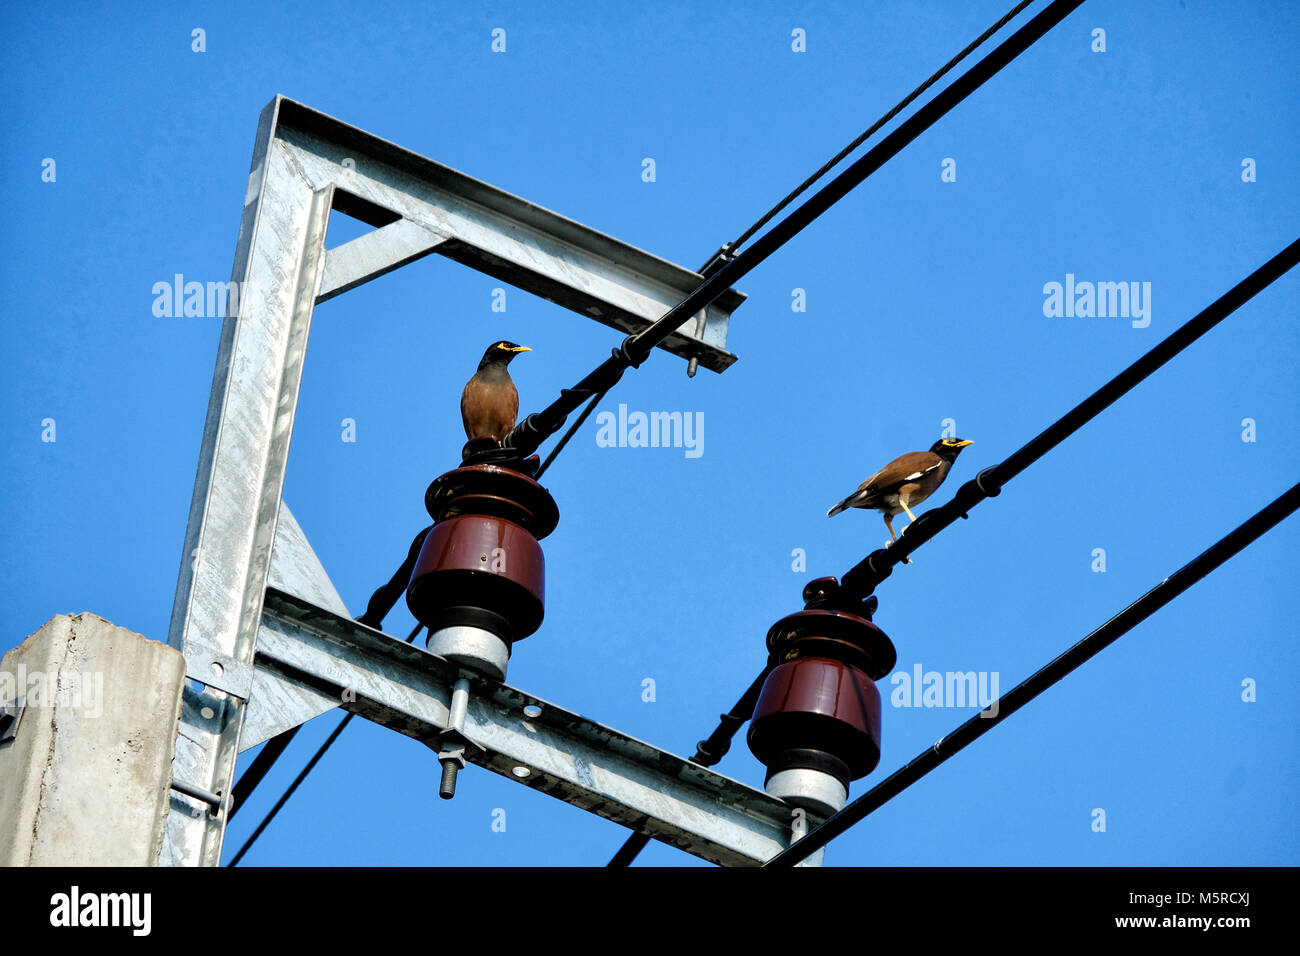 Dos aves paloma stand sobre cables eléctricos con cleary blue sky, disparo horizontal Foto de stock